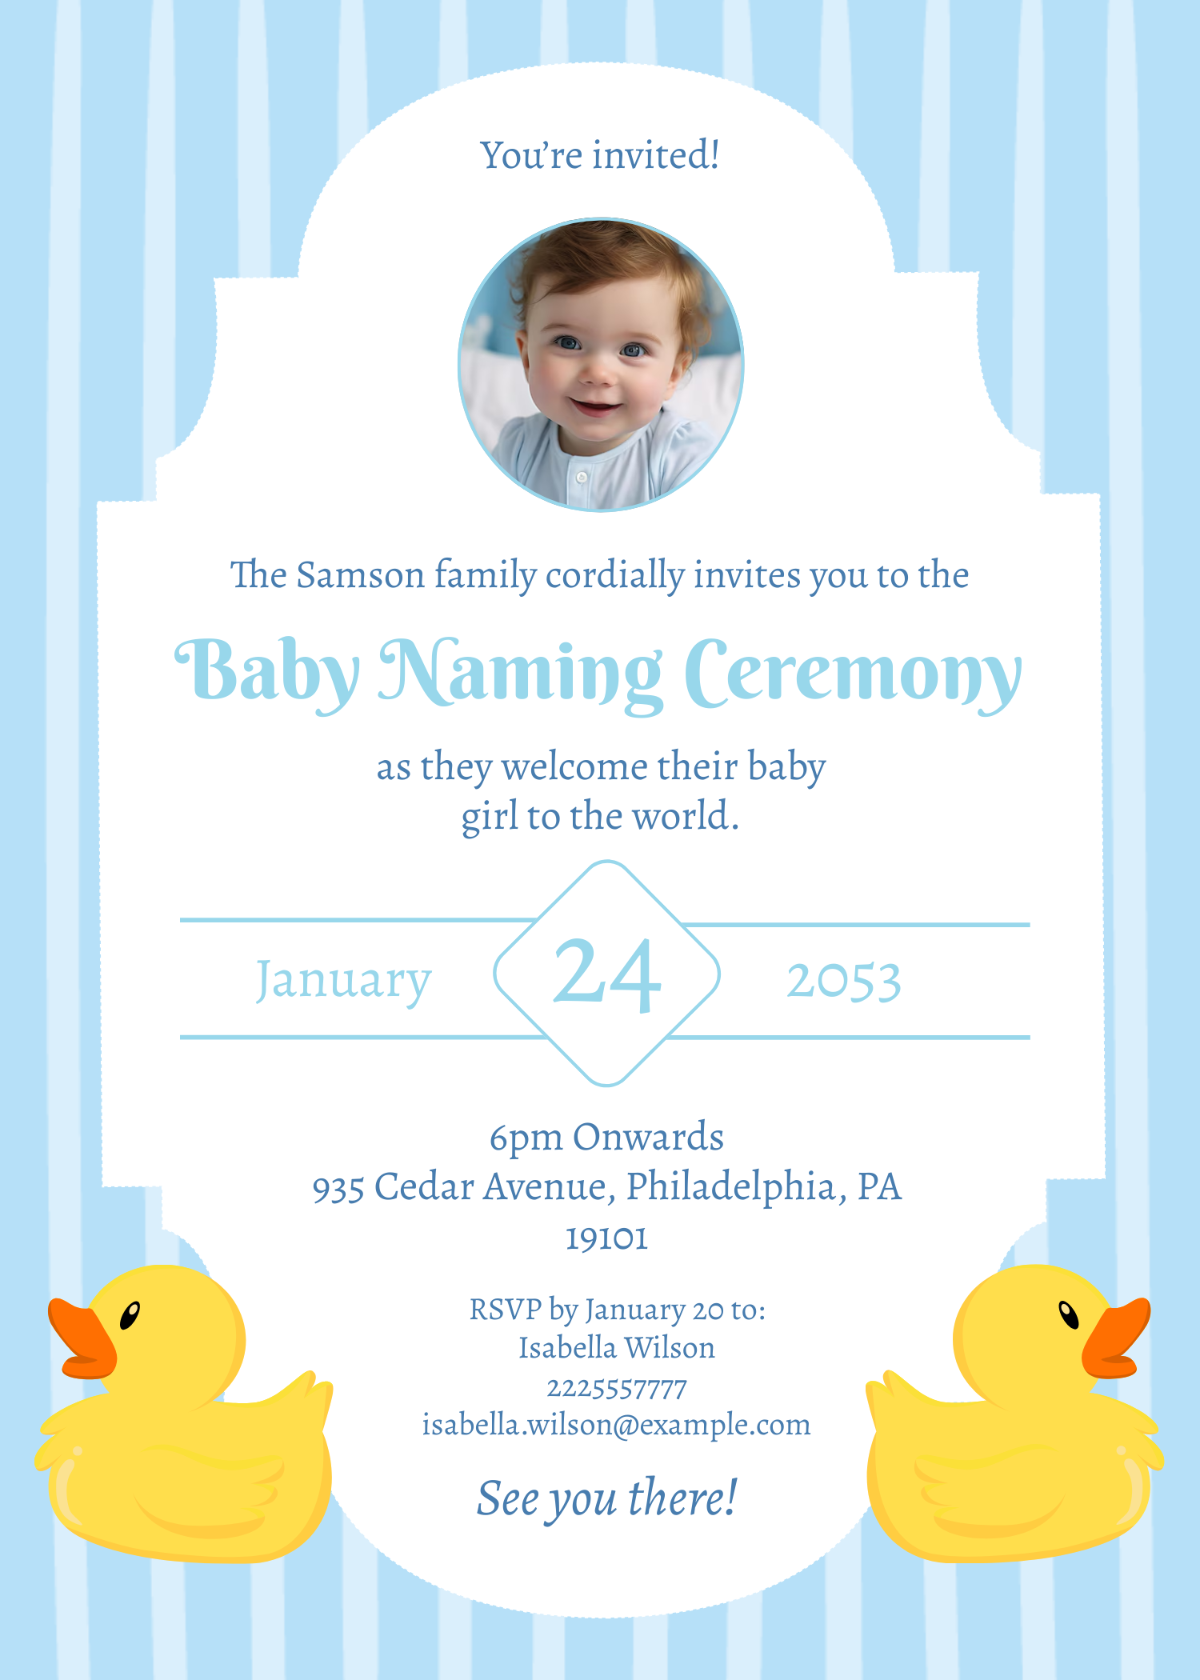 Invitation card for Naming Ceremony